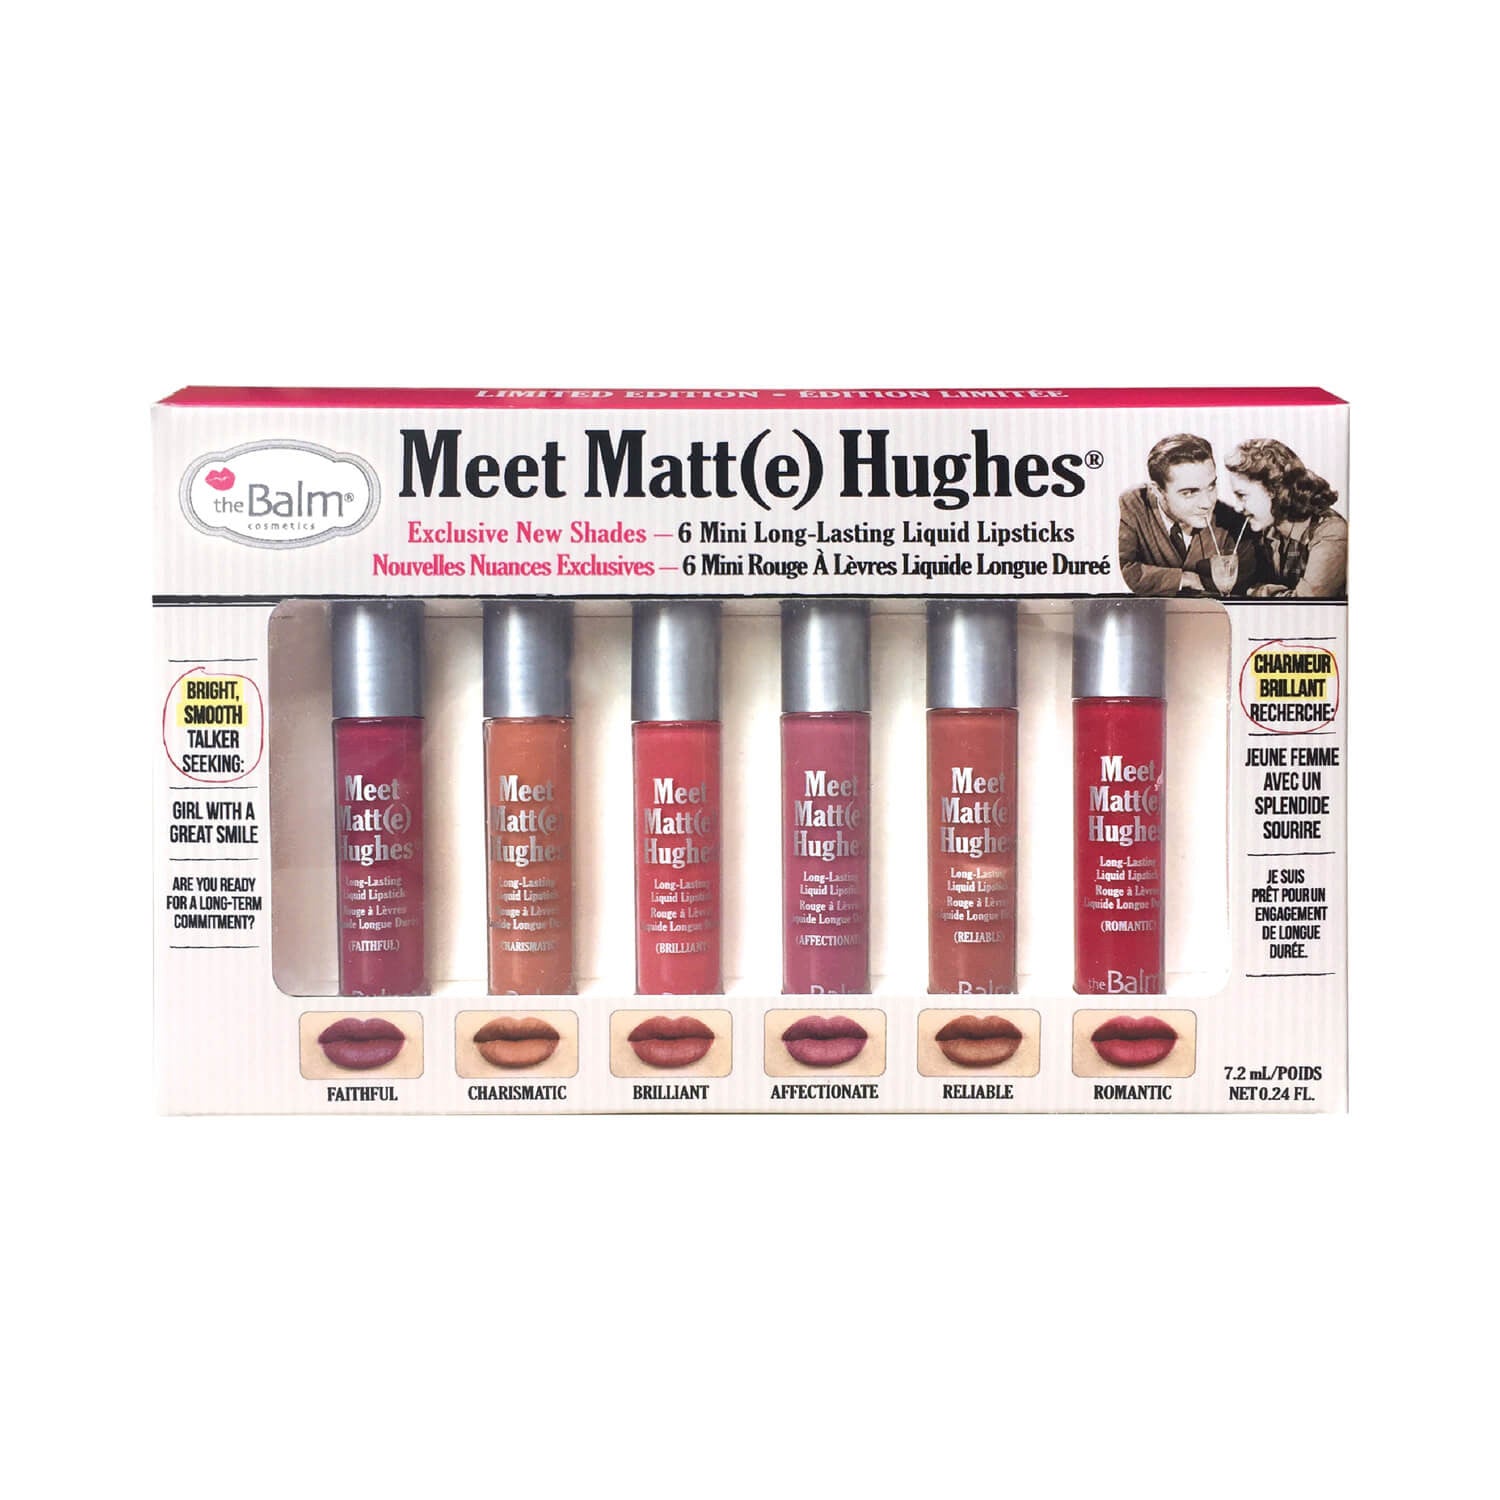 theBalm Meet Matte Hughes Set of 6 Mini Long-Lasting Liquid Lipsticks Exclusive New Shades